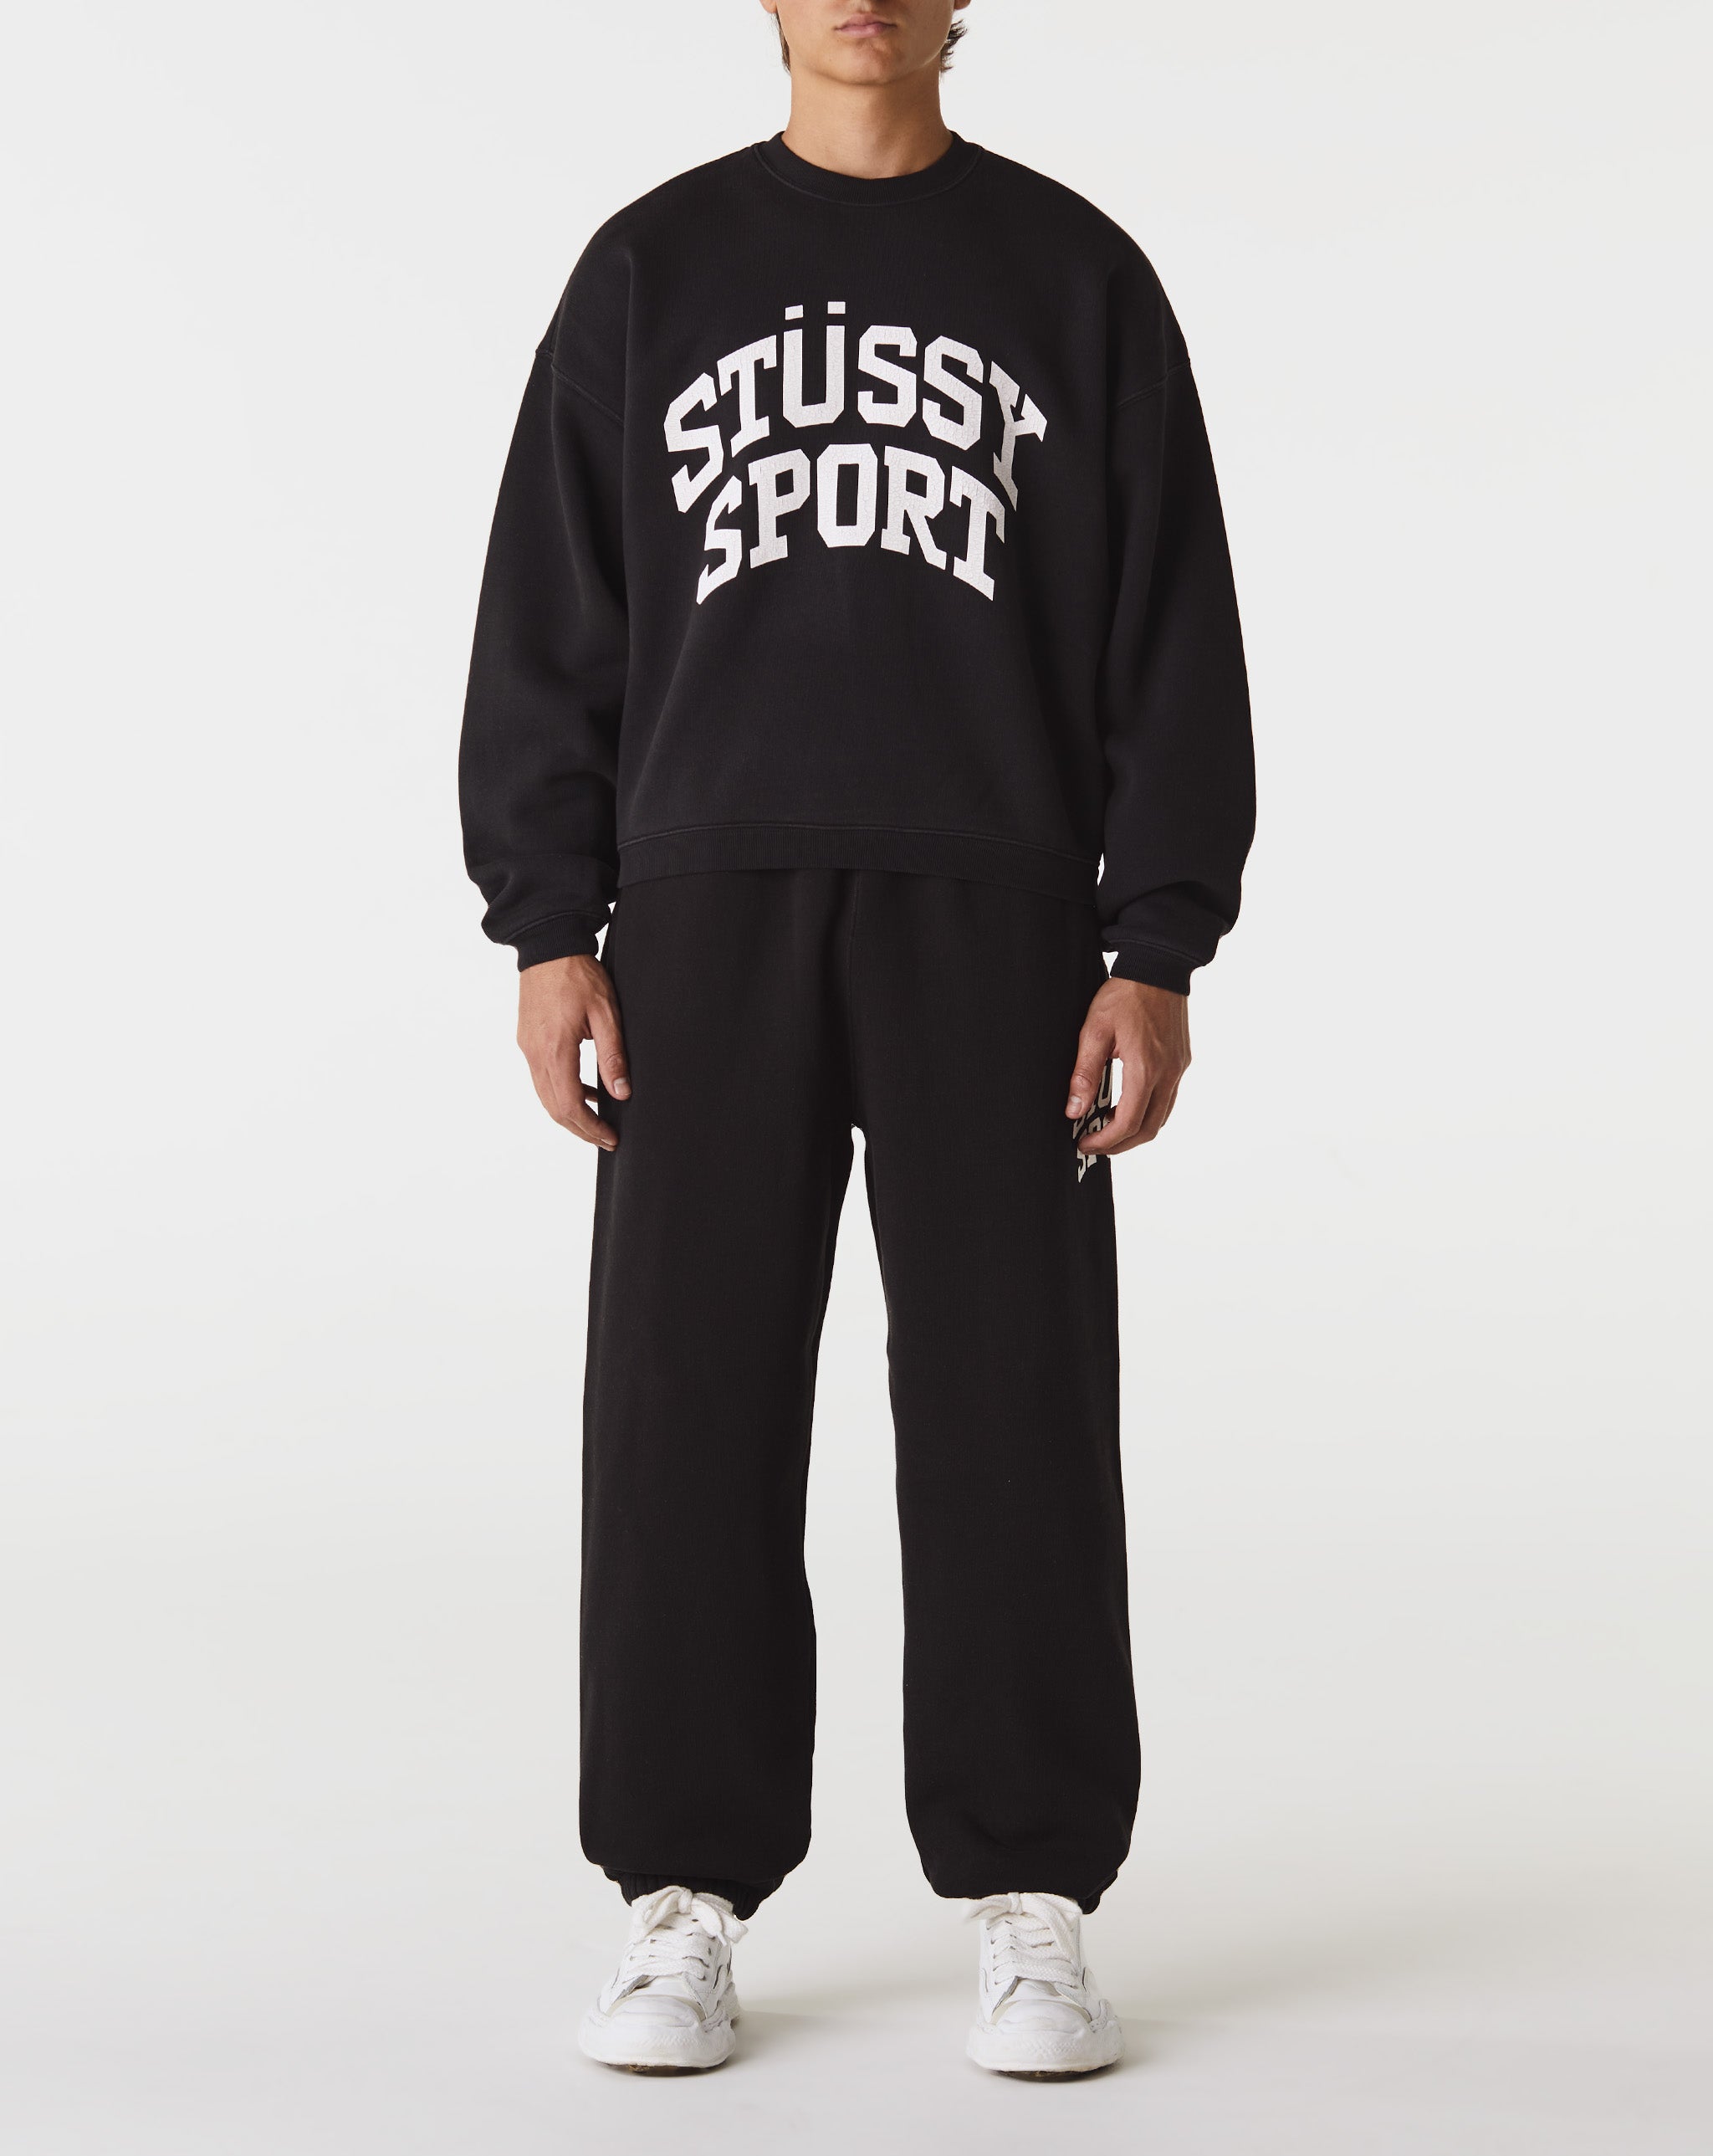 Stüssy Sport Crackle Fleece Pants  - Cheap Urlfreeze Jordan outlet